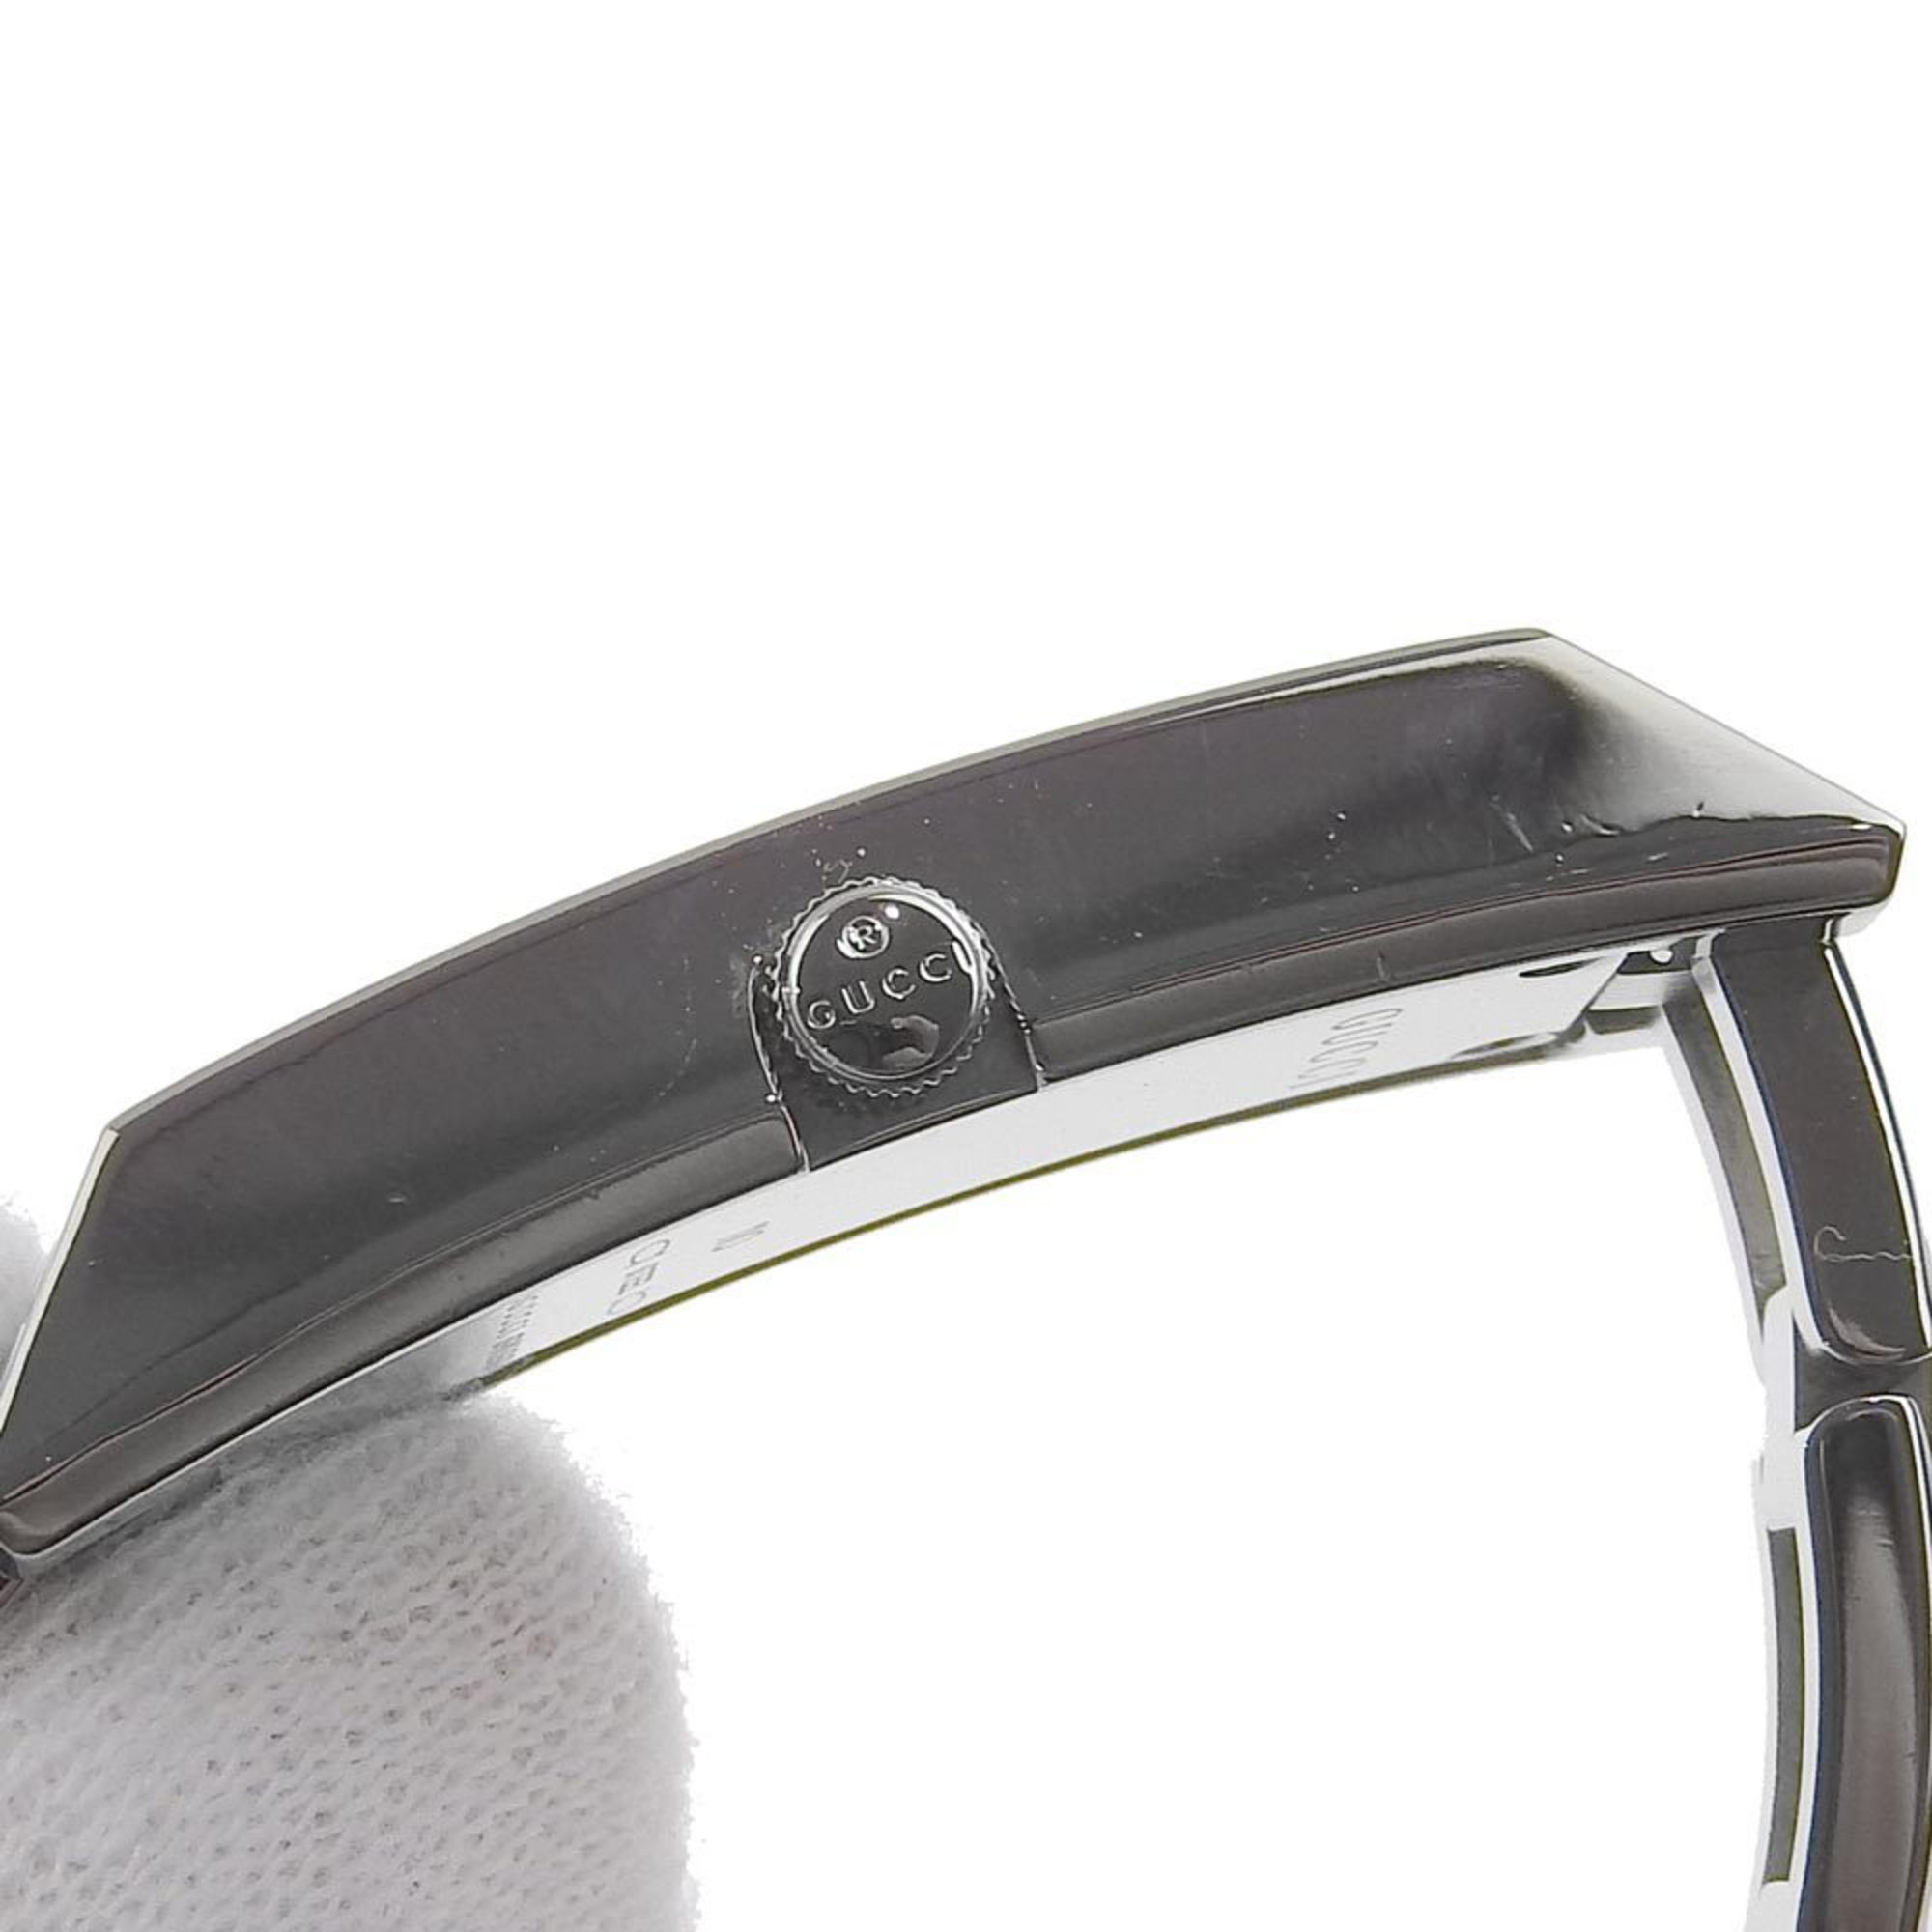 GUCCI 3P diamond watch 110 stainless steel Swiss made silver quartz analog display black dial ladies